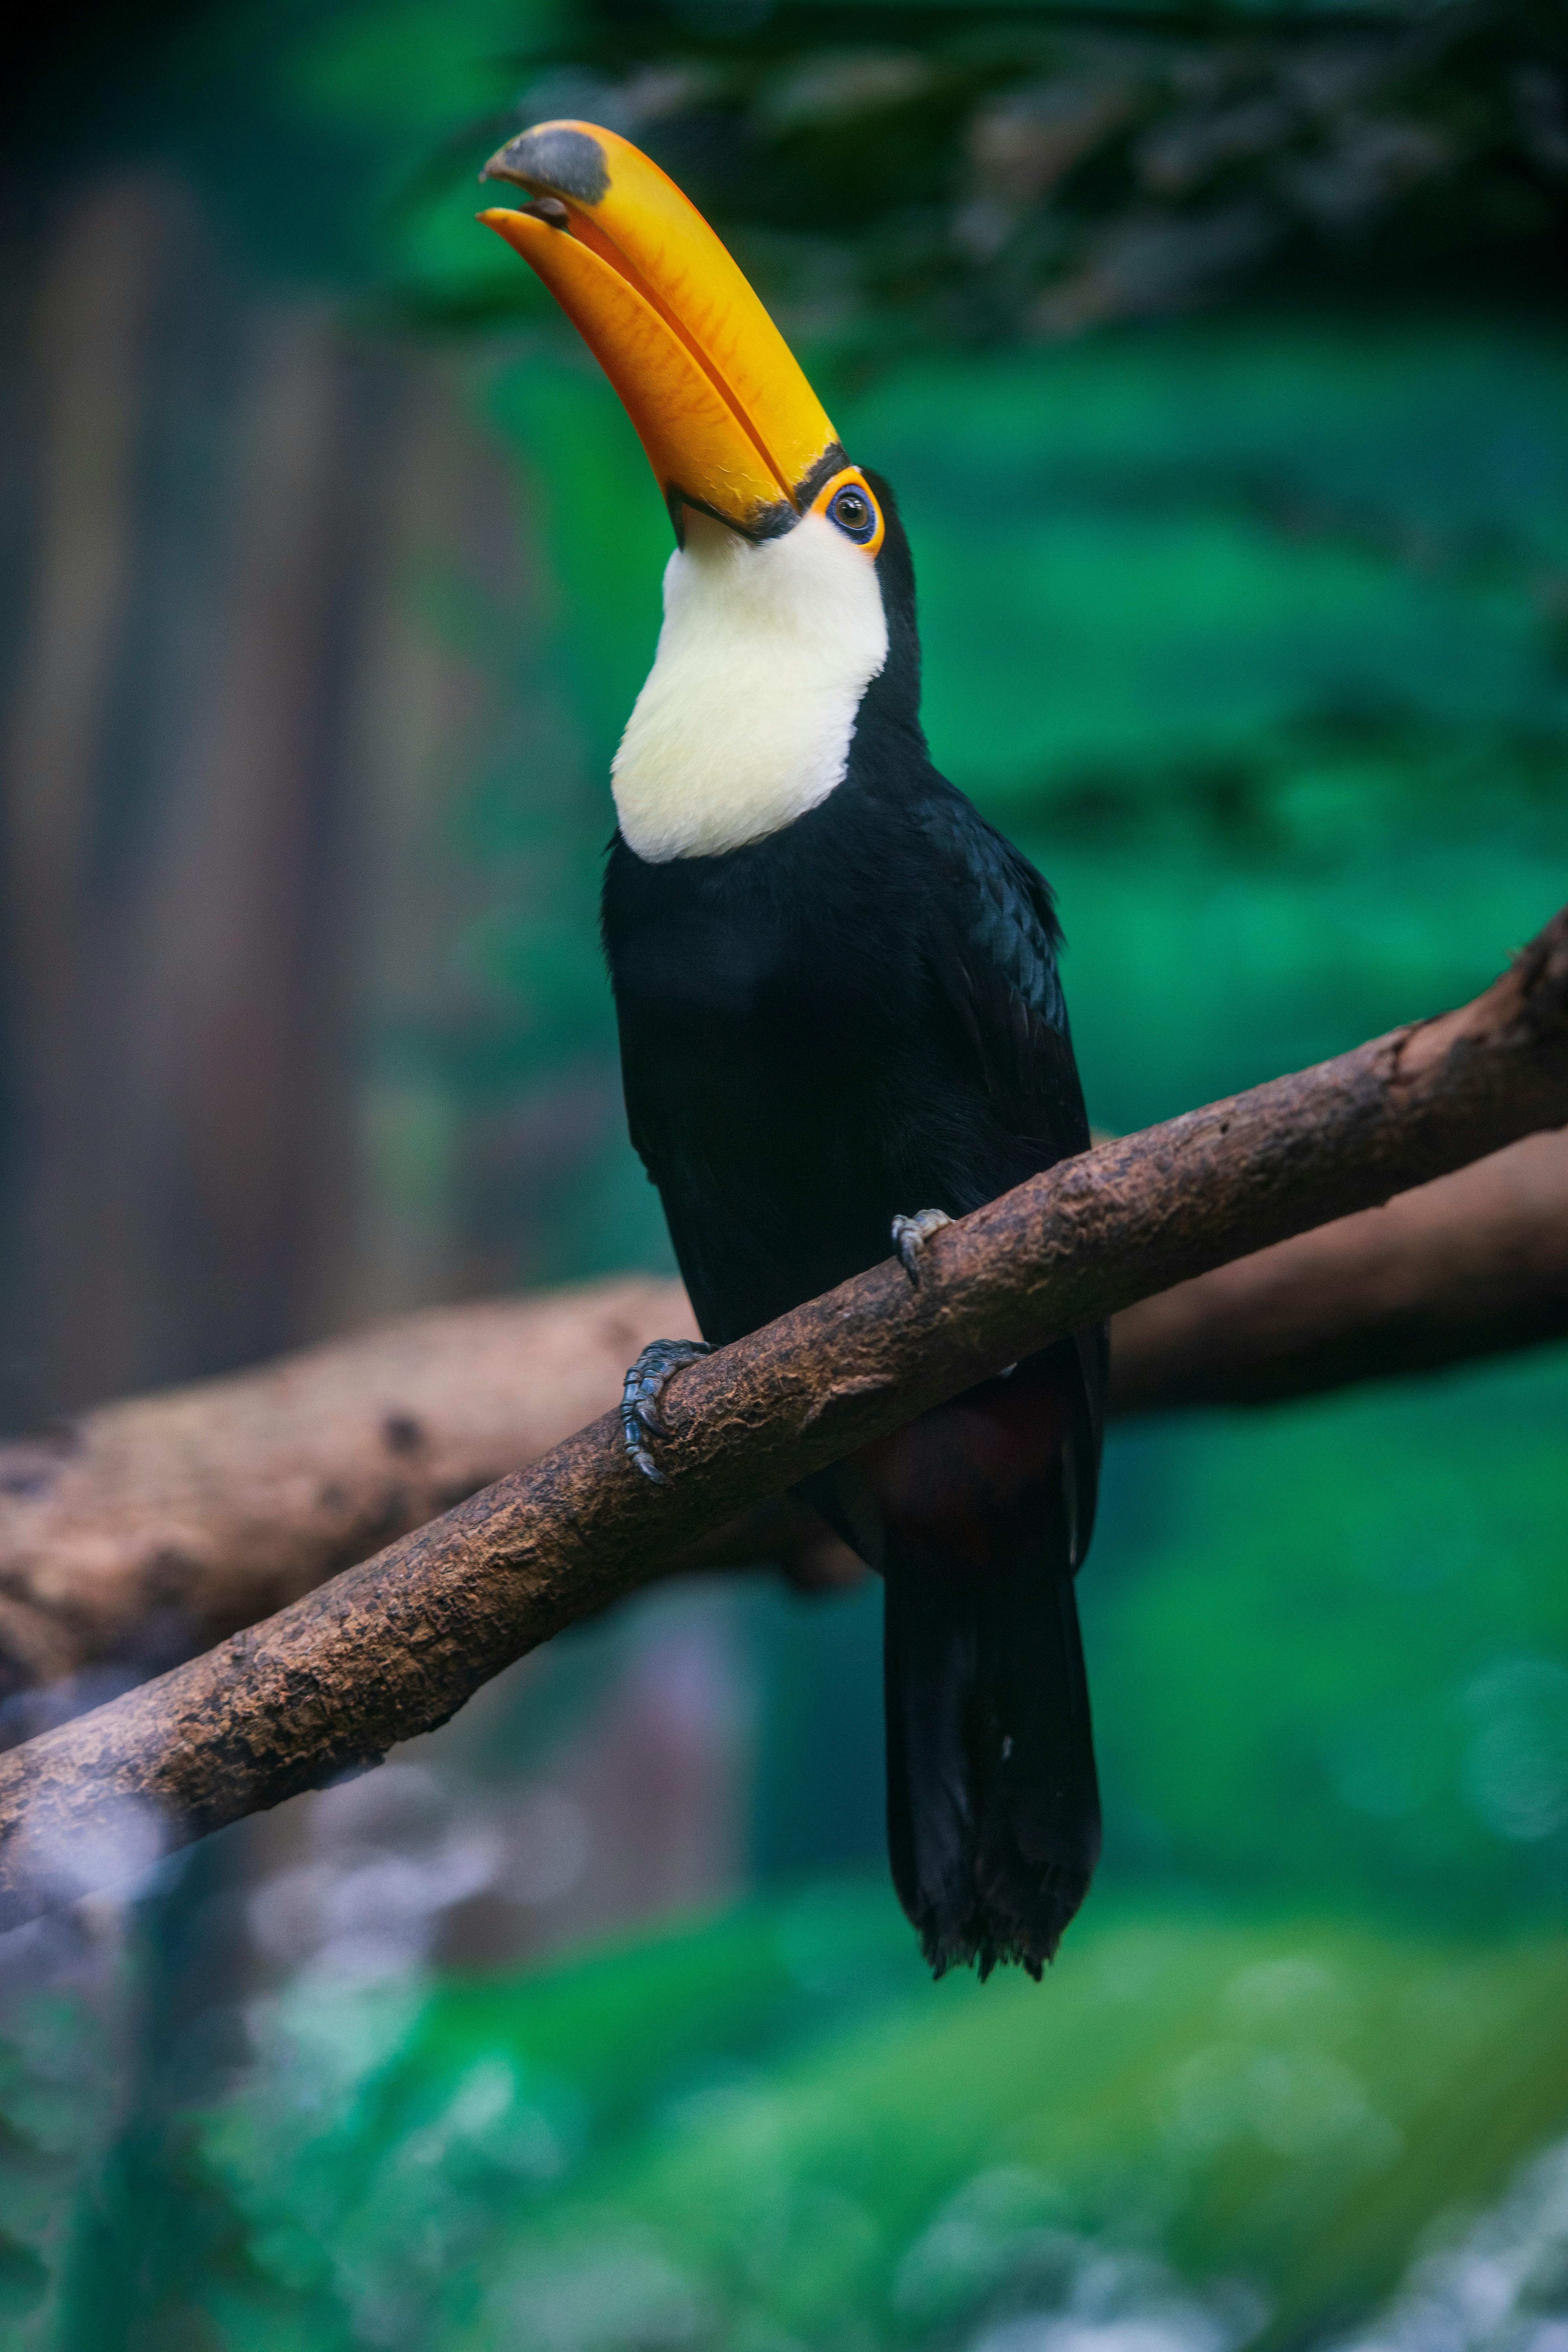 Download wallpaper 5304x7952 toucan bird beak bright branch hd  background